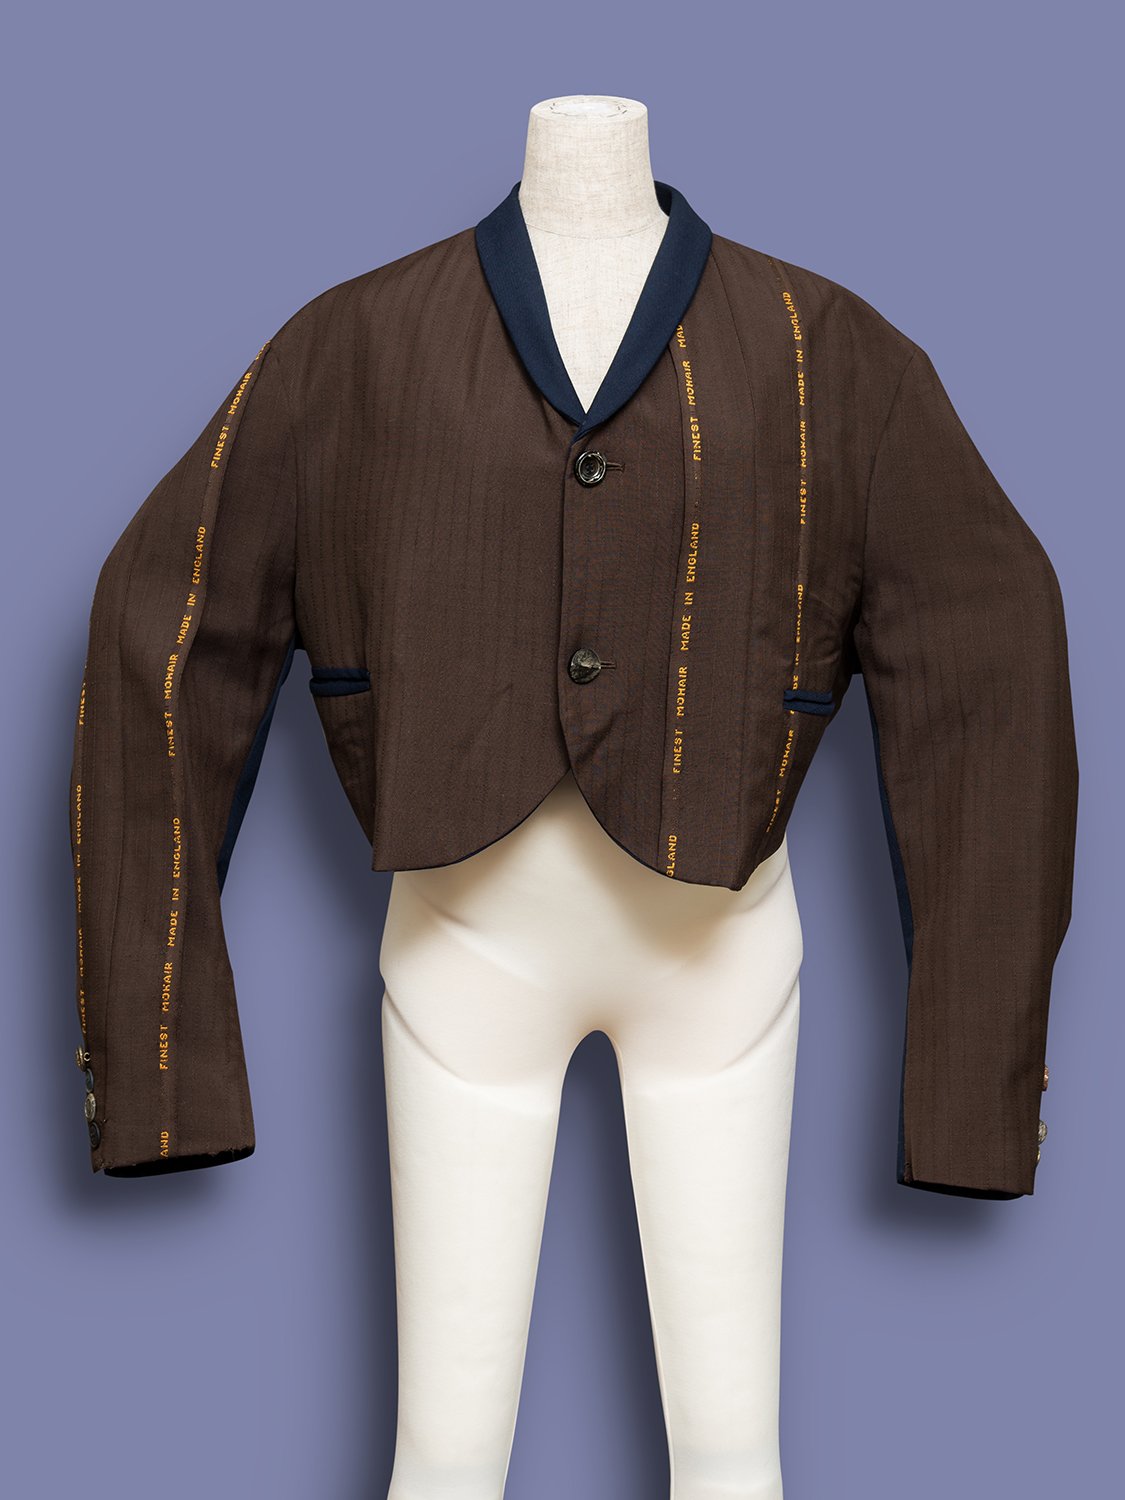 Christopher Nemeth Extra Long Sleeve Jacket, 1980s or 1990s